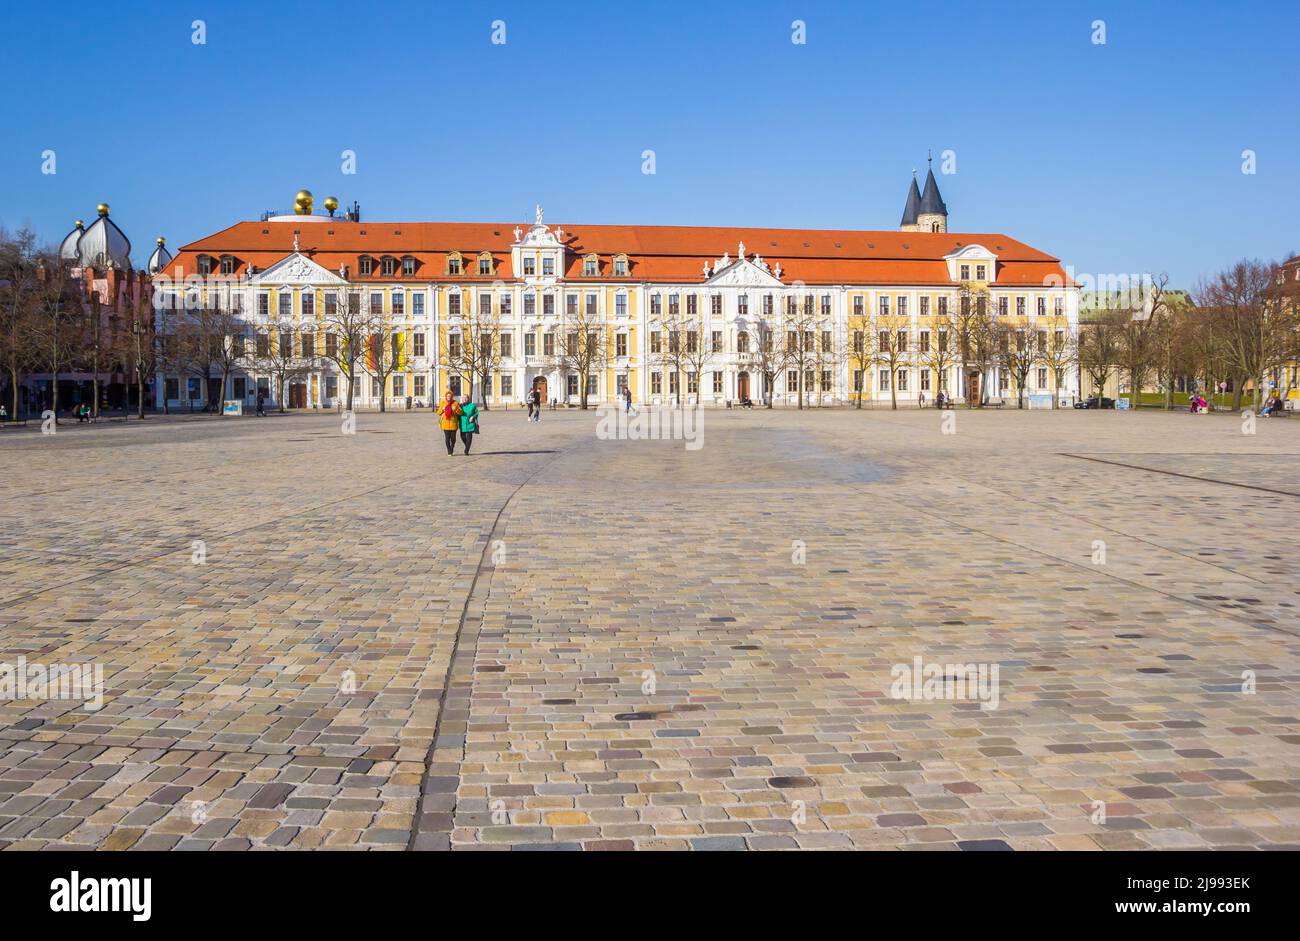 Cobblestones on the historic Domplatz square in Magdeburg, Germany Stock Photo